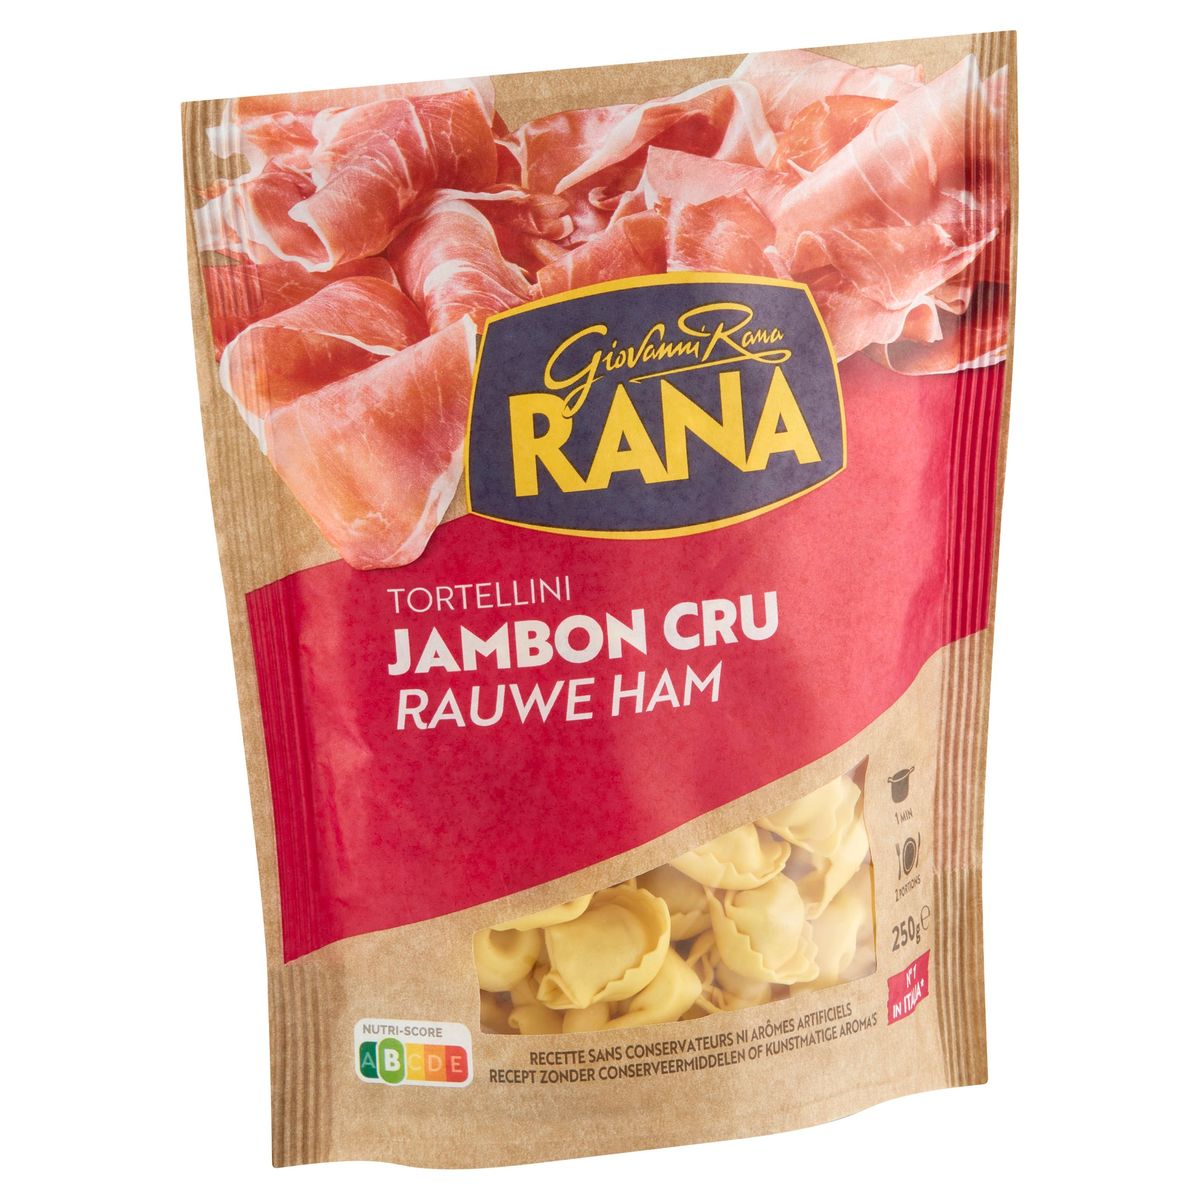 Giovanni Rana Tortellini Rauwe Ham 250 g